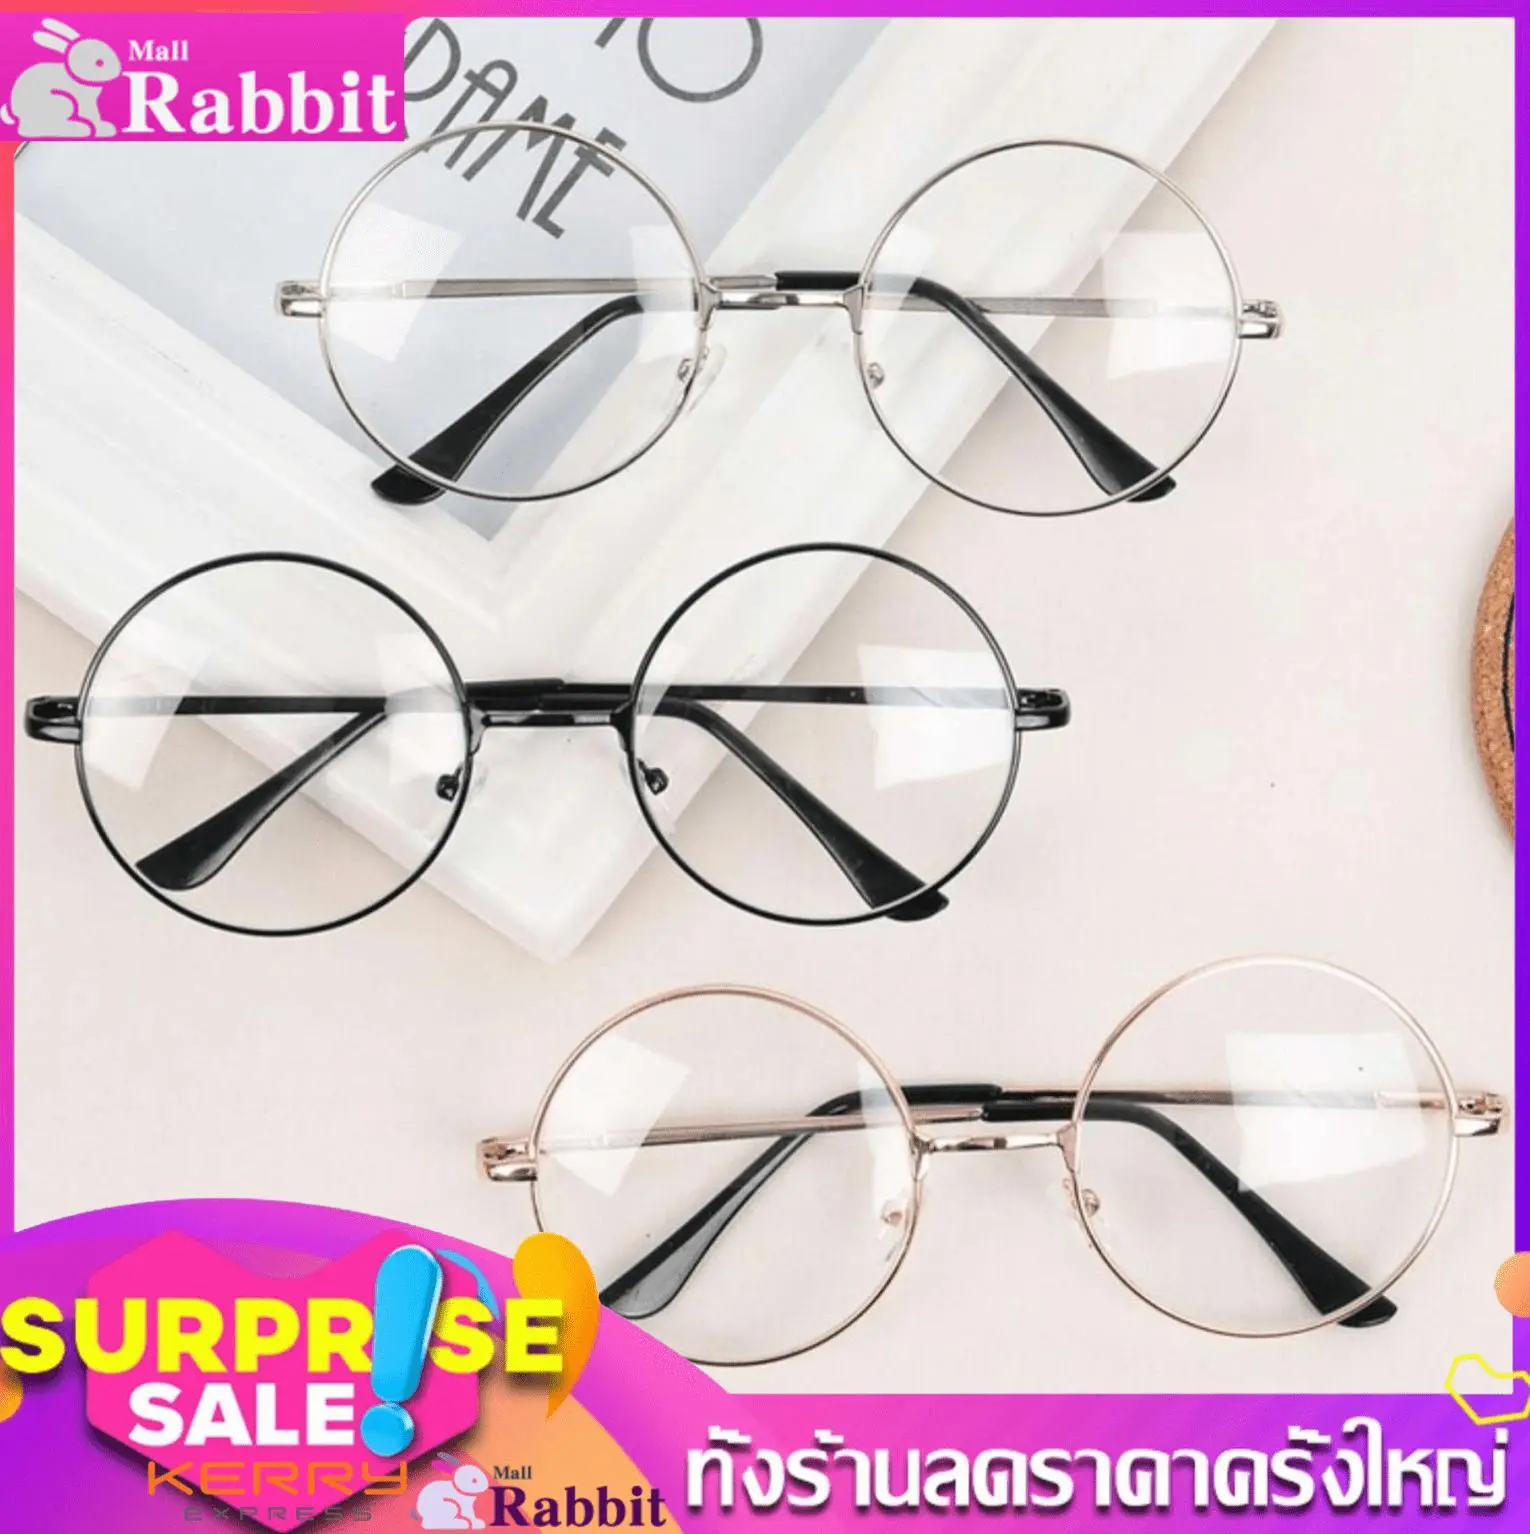 Rabbit Mall แว่นตากรองแสง แว่นกรองแสง ทรงกลม 901 (กรองแสงคอม กรองแสงมือถือ ถนอมสายตา)